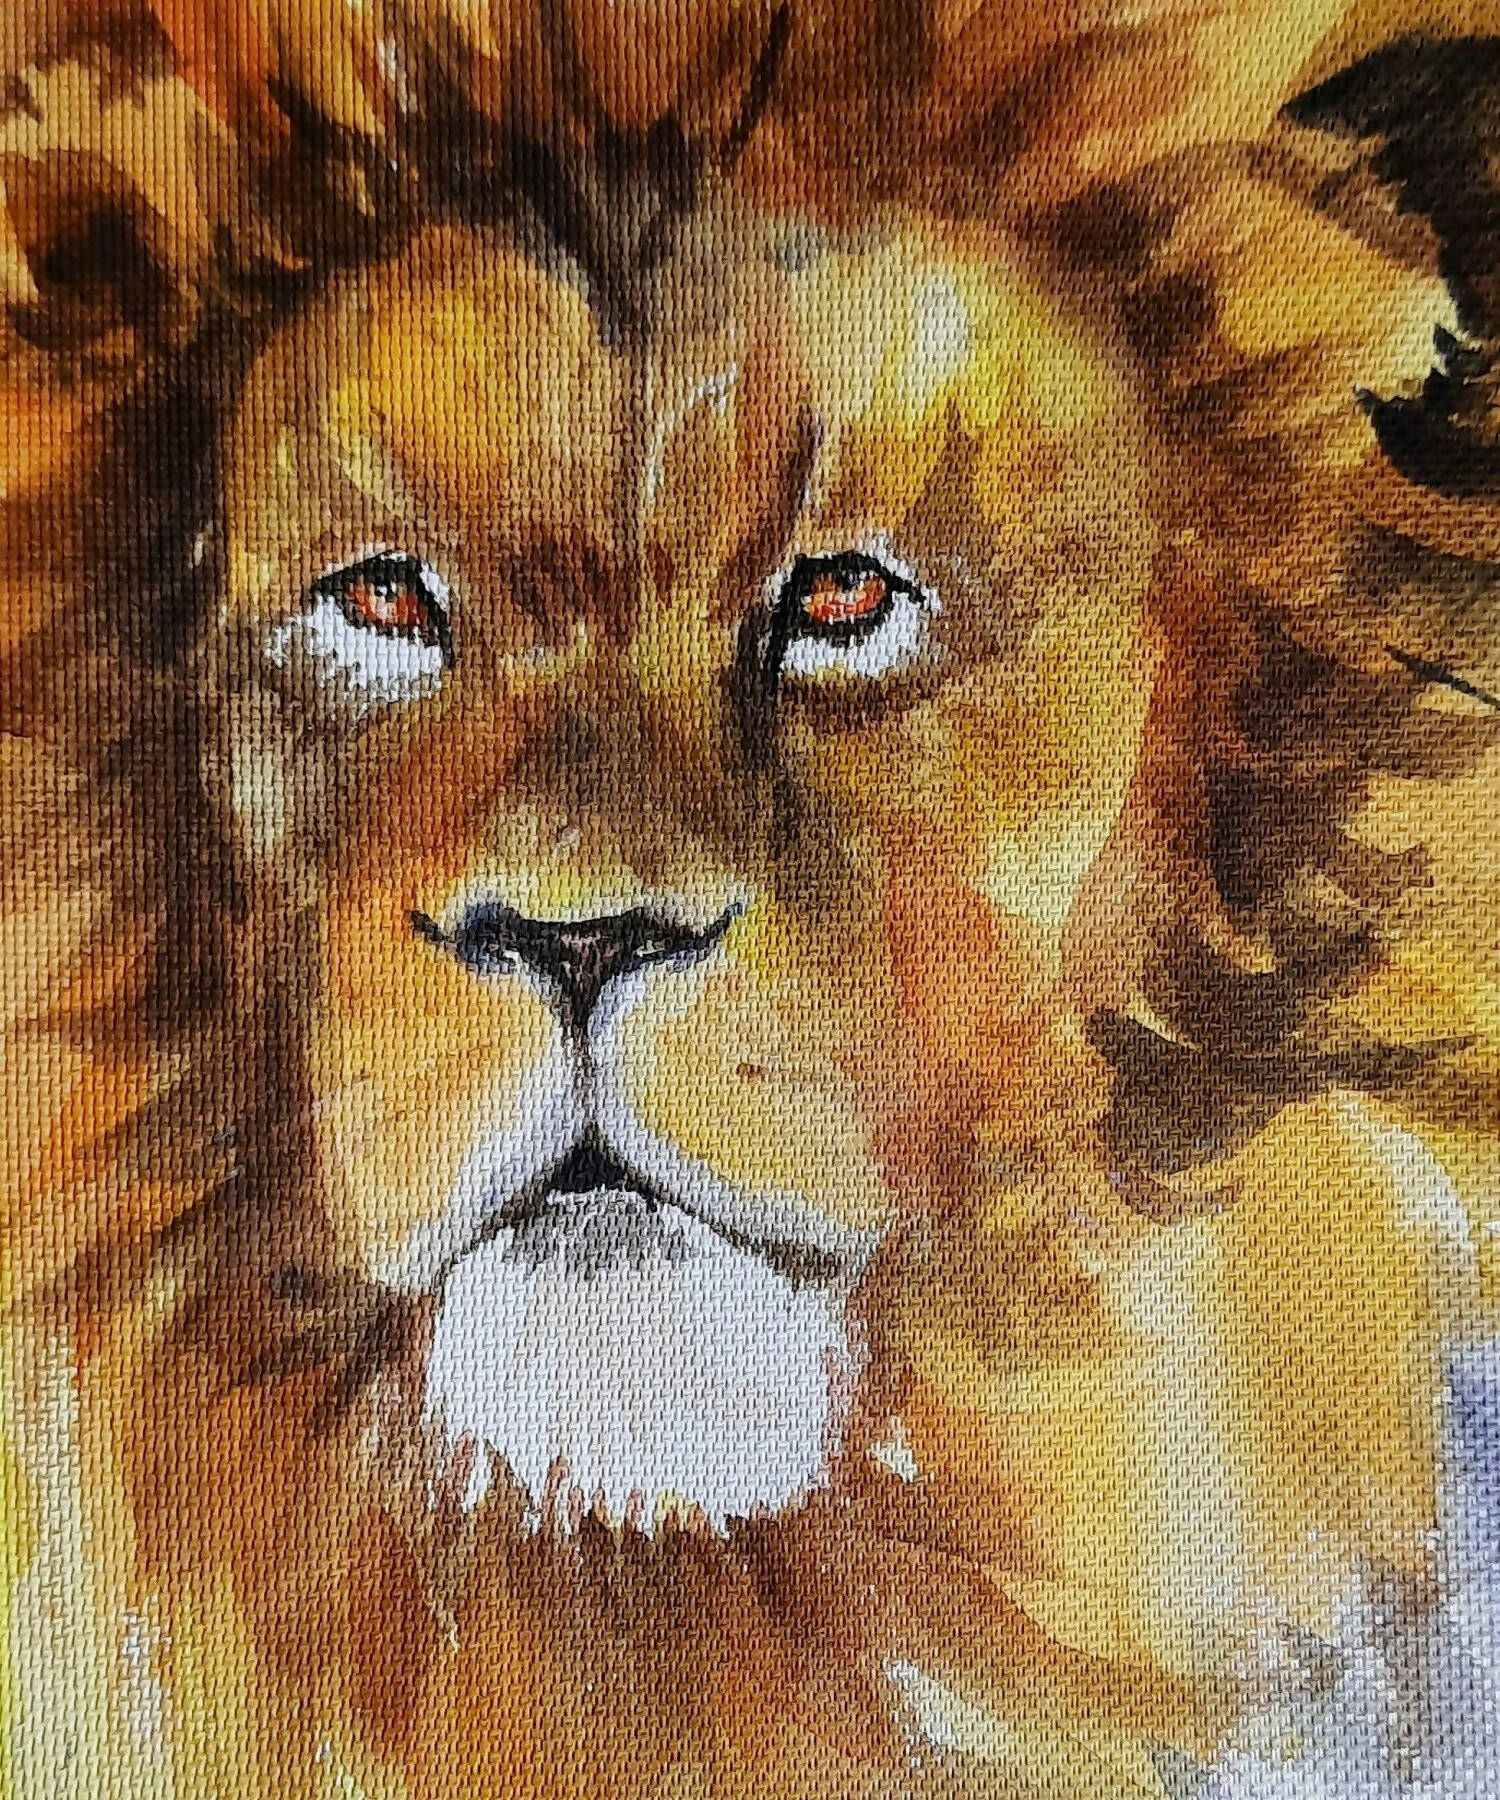 Lion King 2 Watercolour on paper